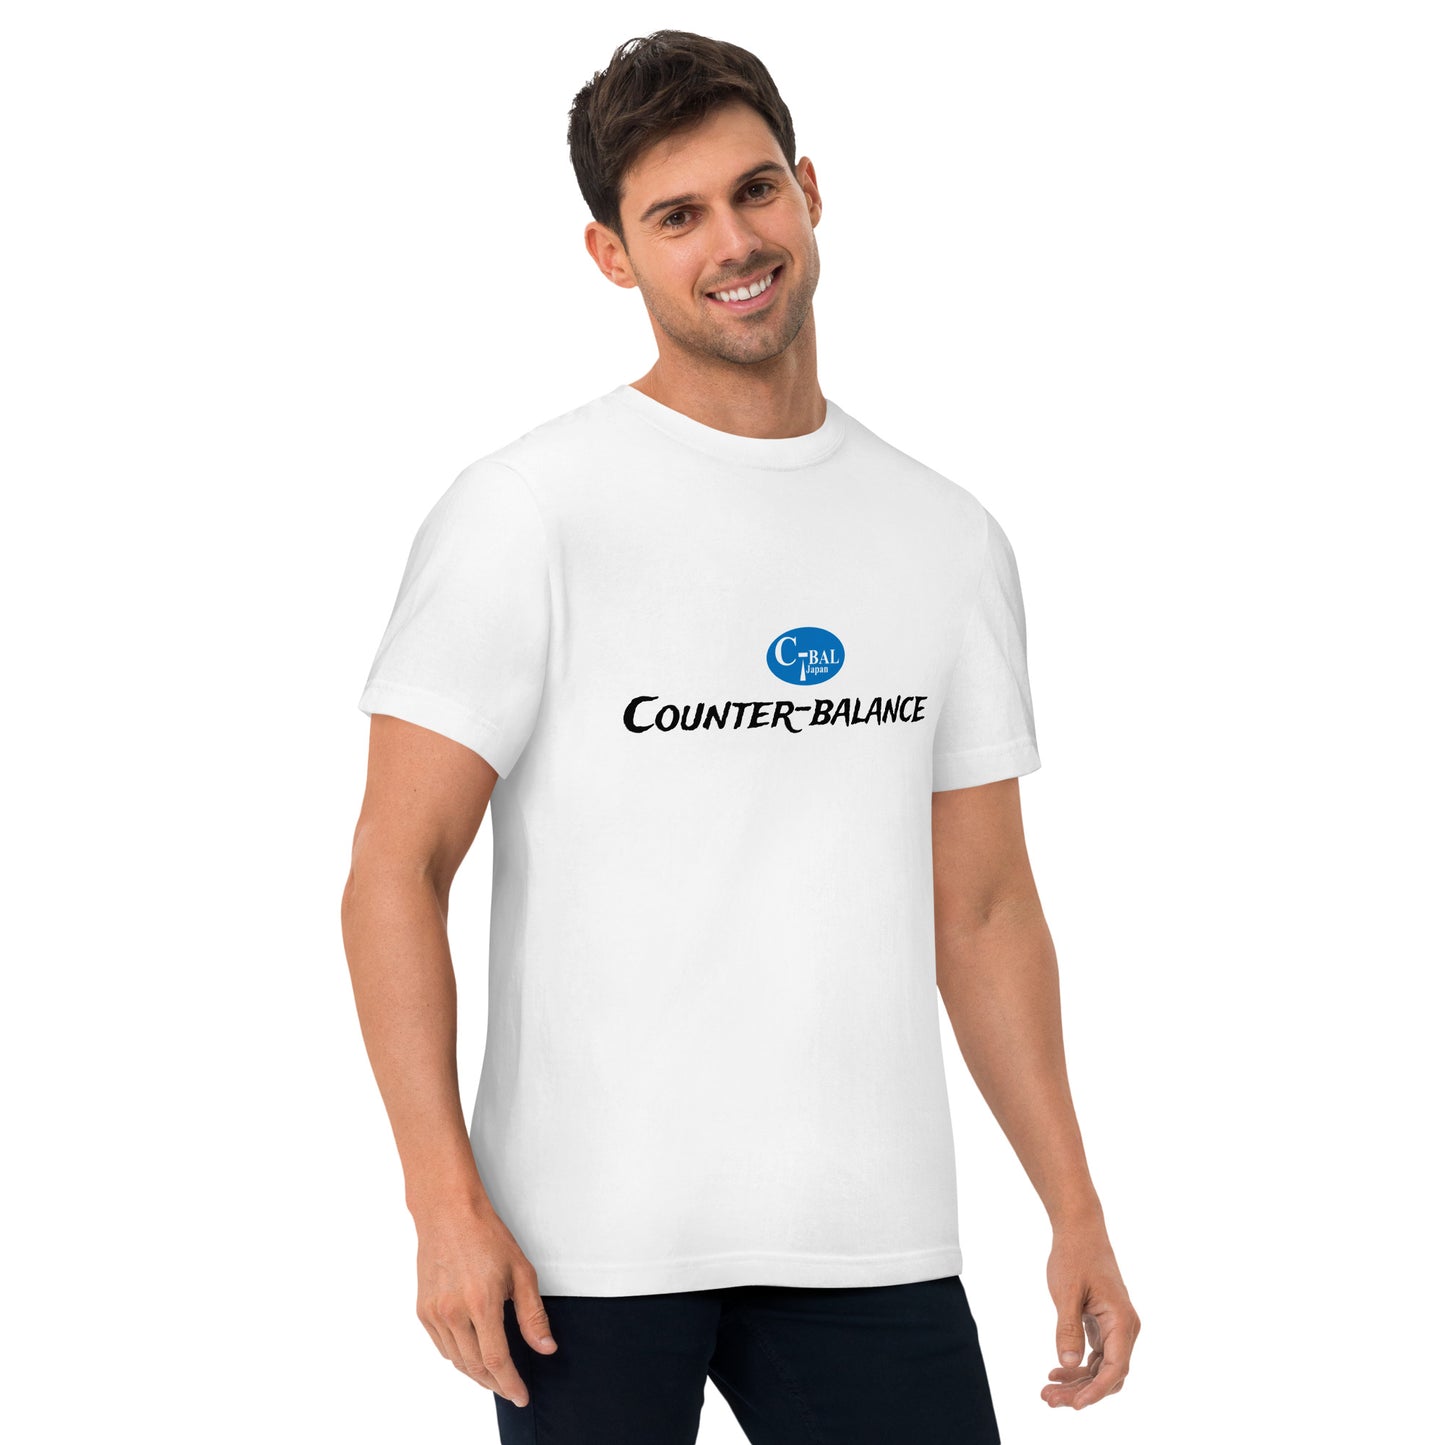 A000 - High Quality Cotton T-shirt (C-BAL : White/Blue)